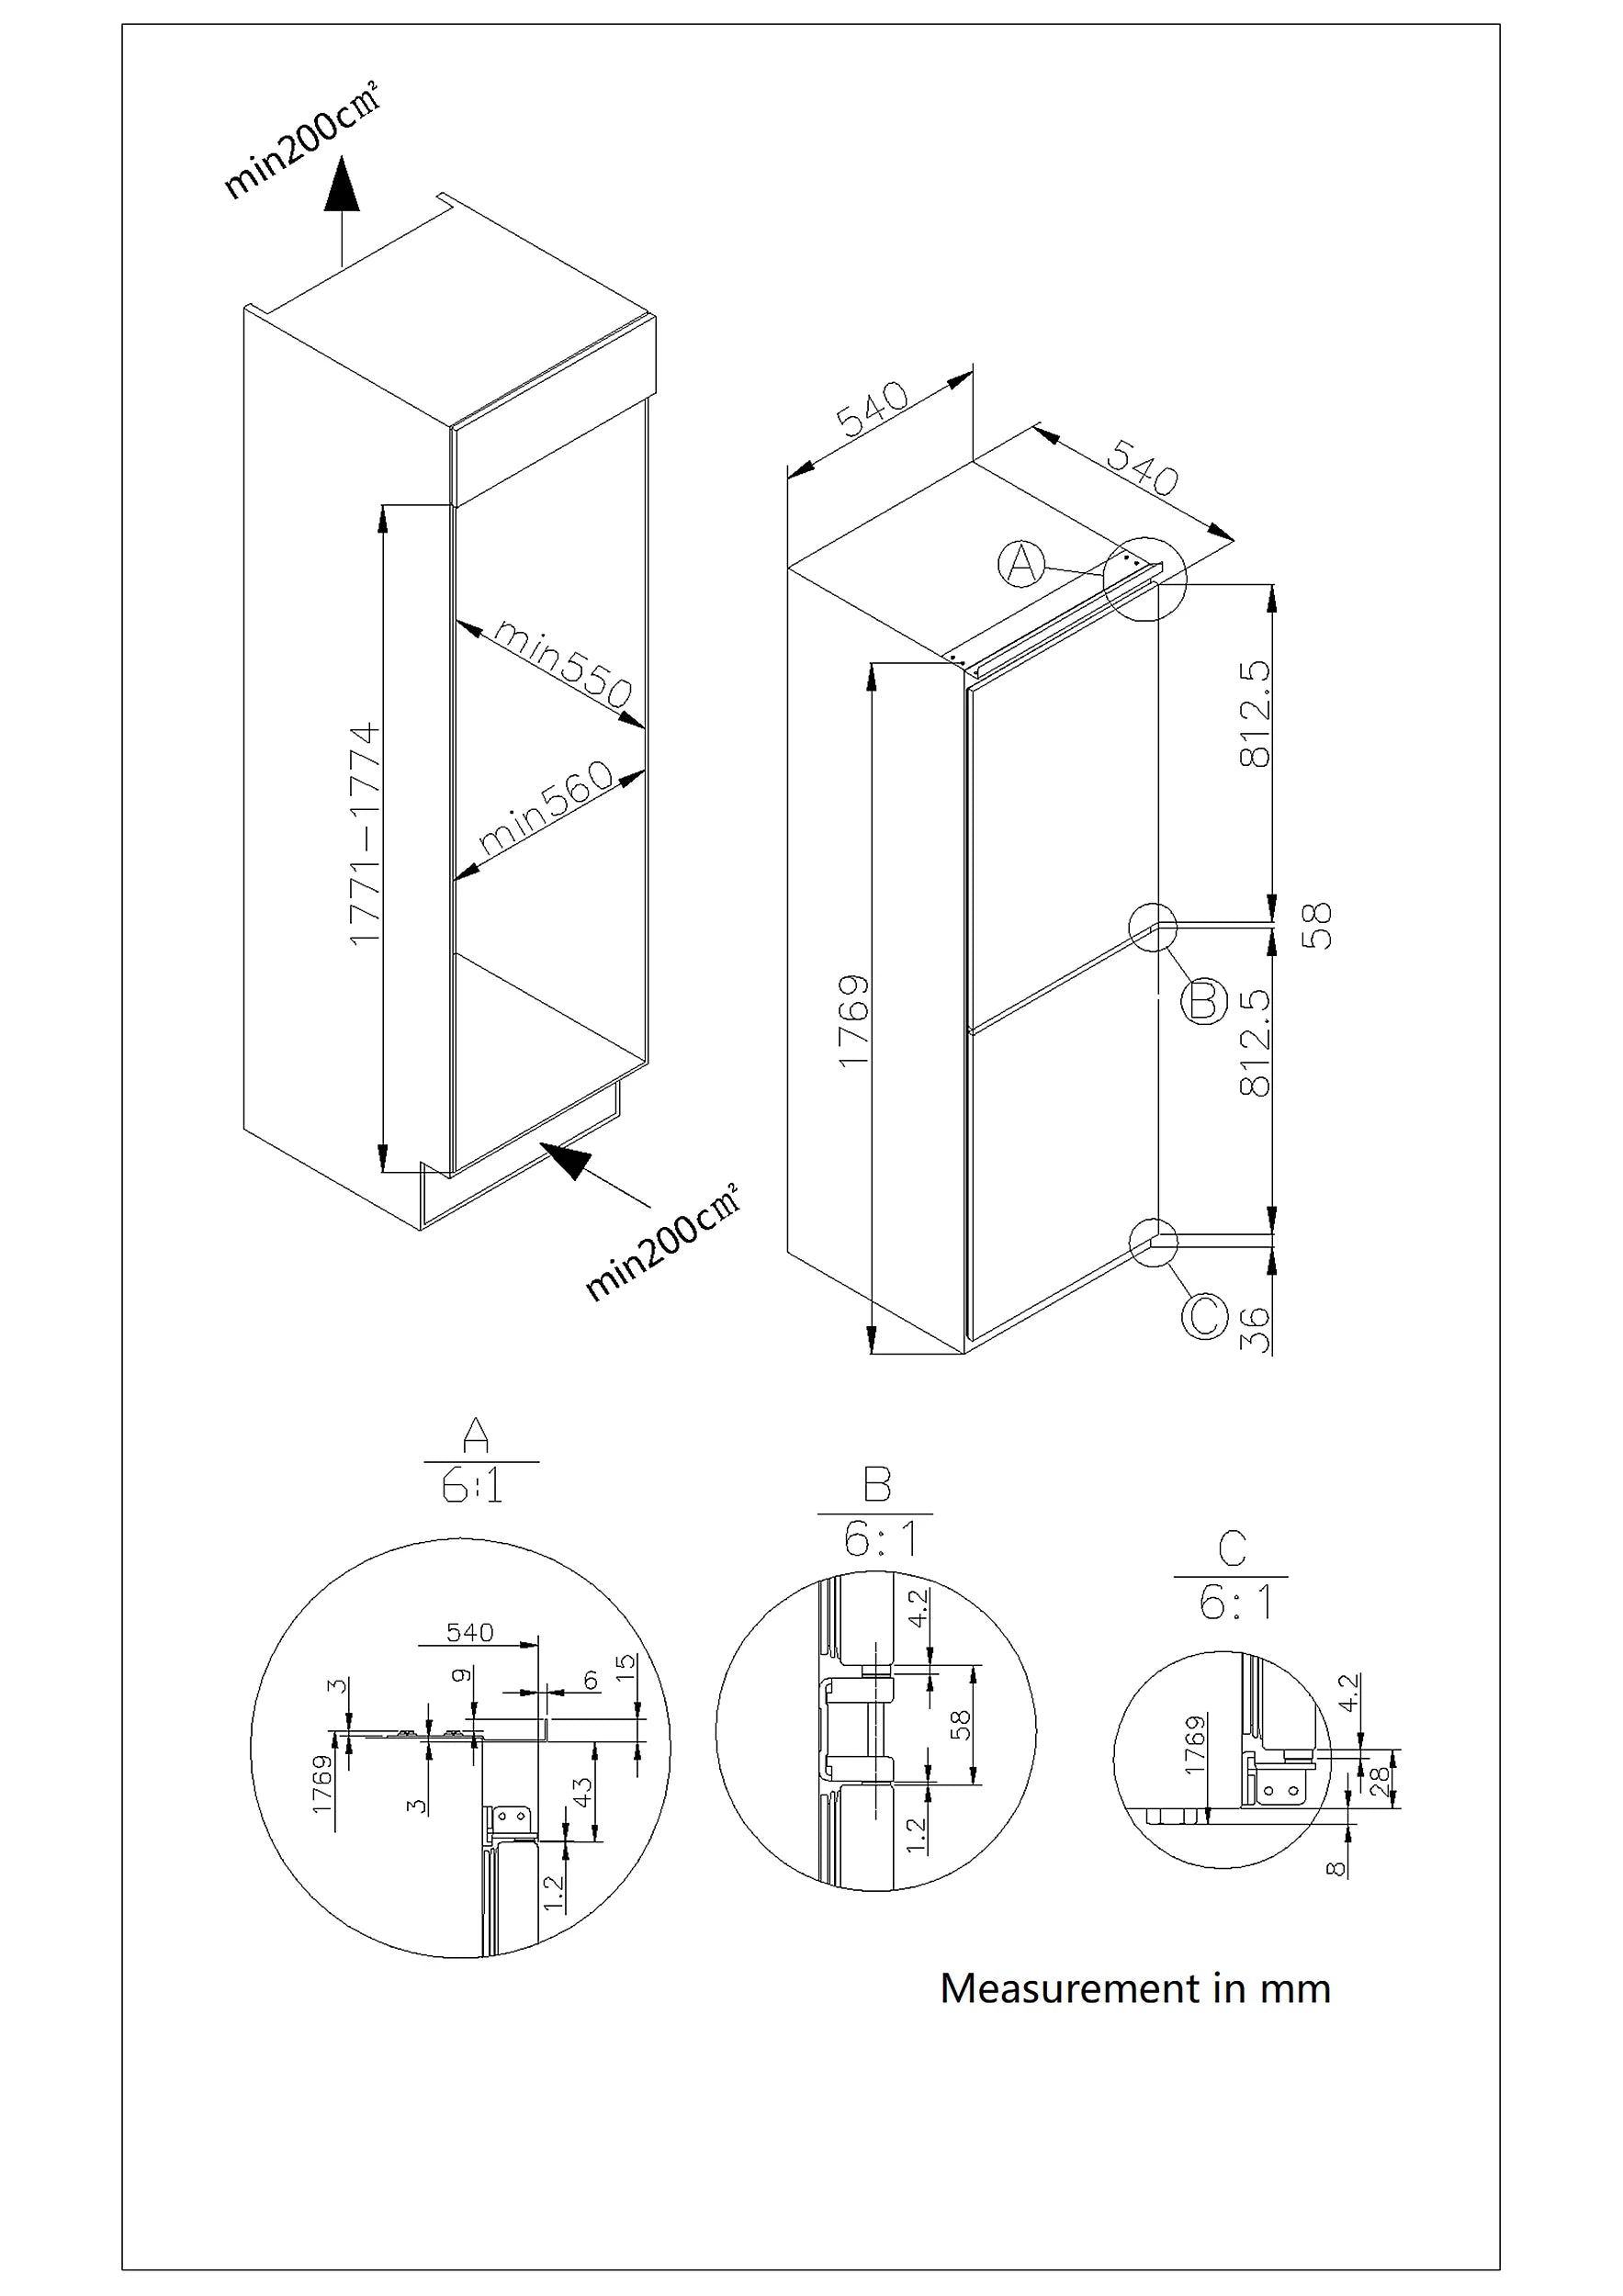 GoodHome-Automatic defrost Fridge freezer-Integrated- White-GHBI5050FFUK-50:50-2223